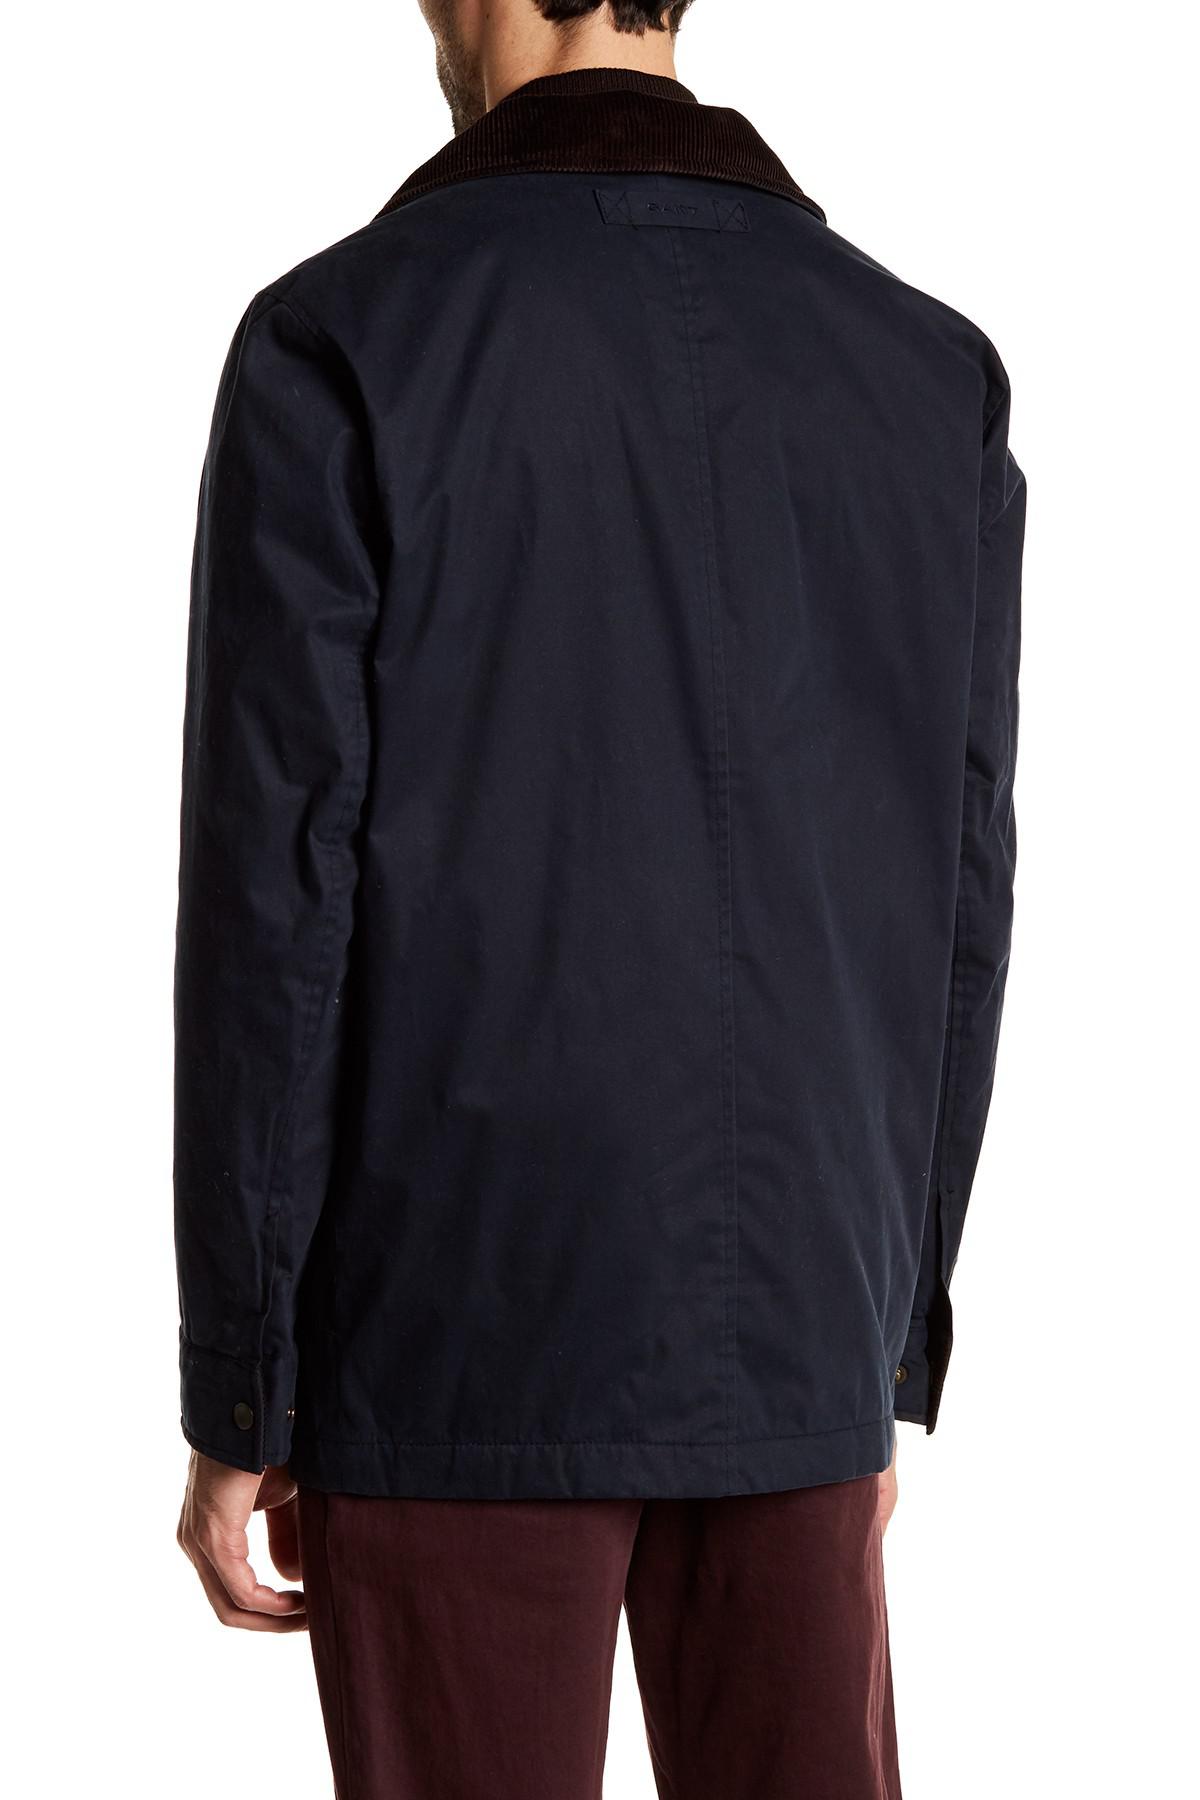 GANT Cotton The Double Decker Jacket in Navy (Blue) for Men - Lyst